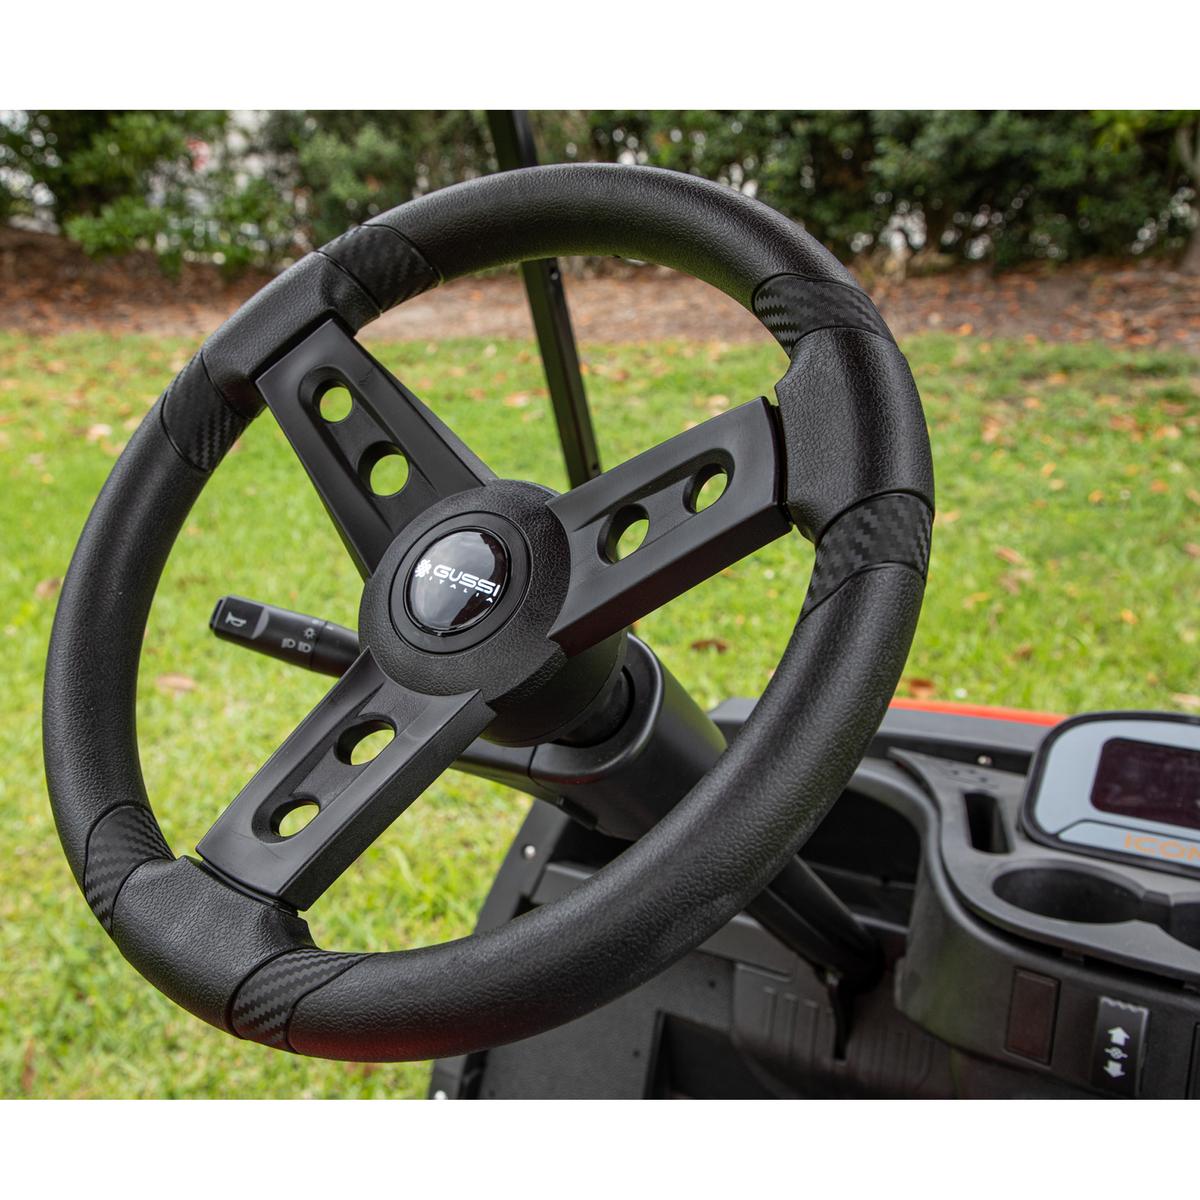 Gussi Italia® Lugana Black Steering Wheel Compatible with ICON Golf Car Models & AEV Golf Car Models